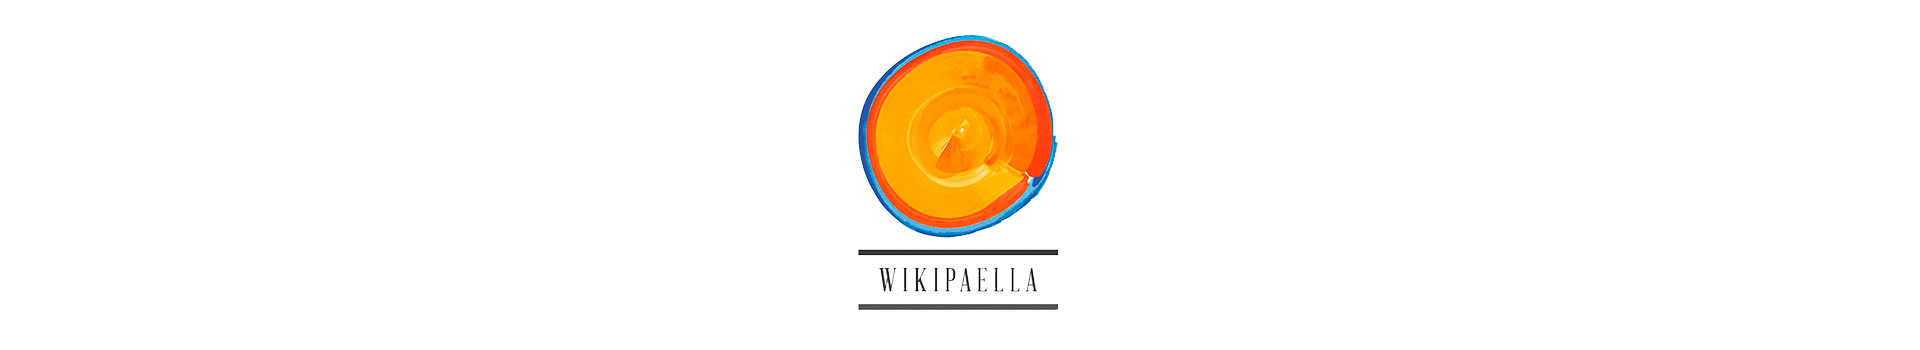 app wikipaella